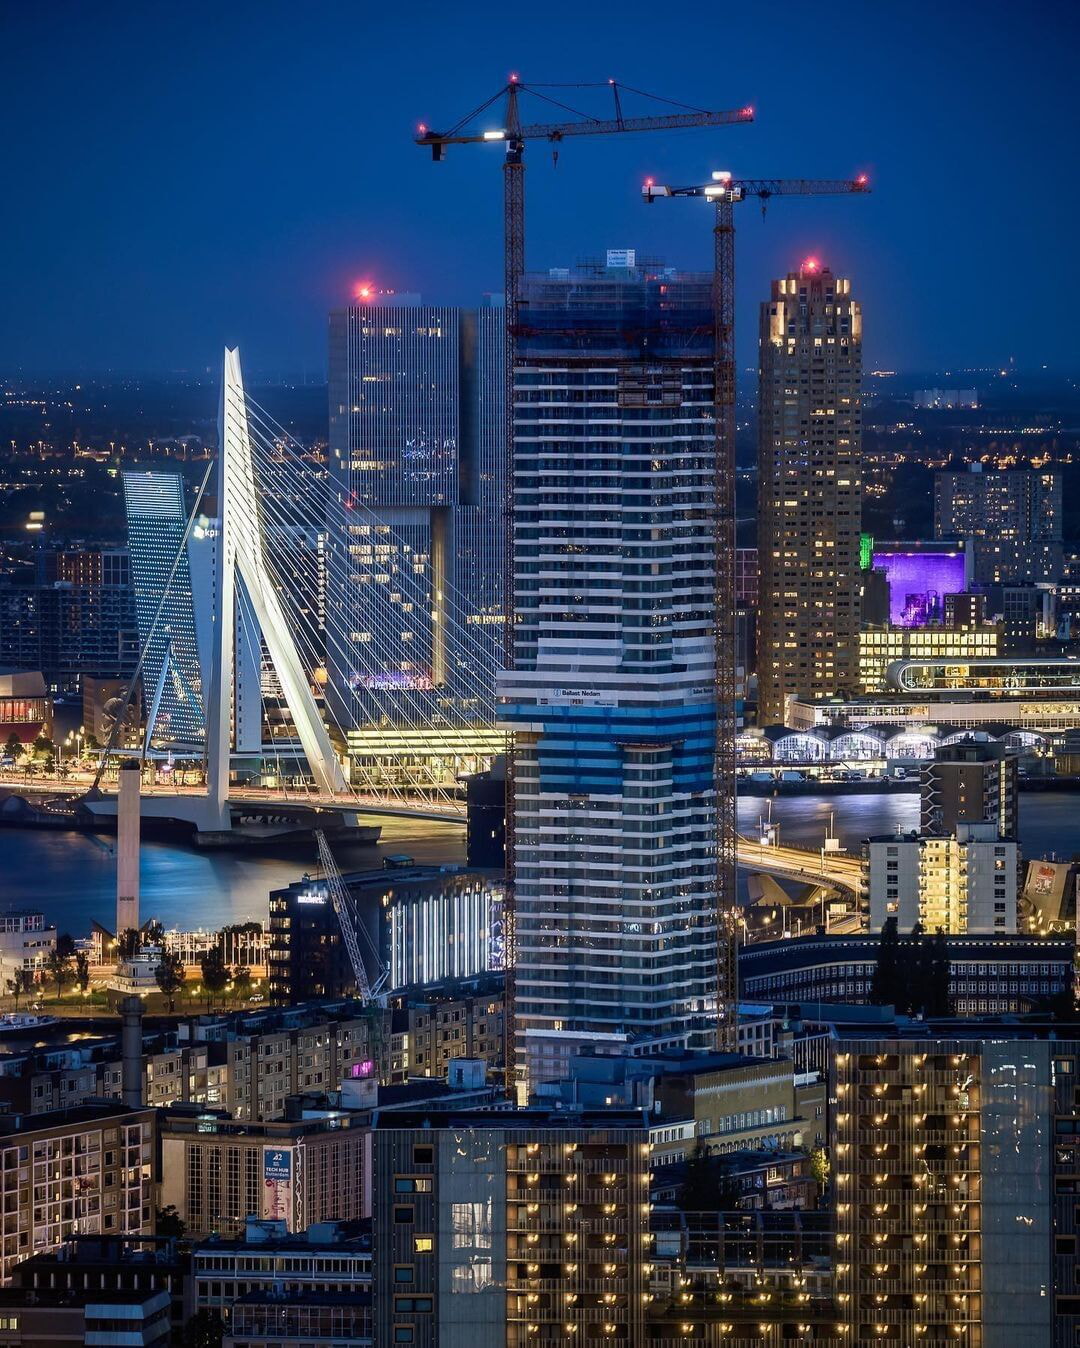 Rotterdam - City